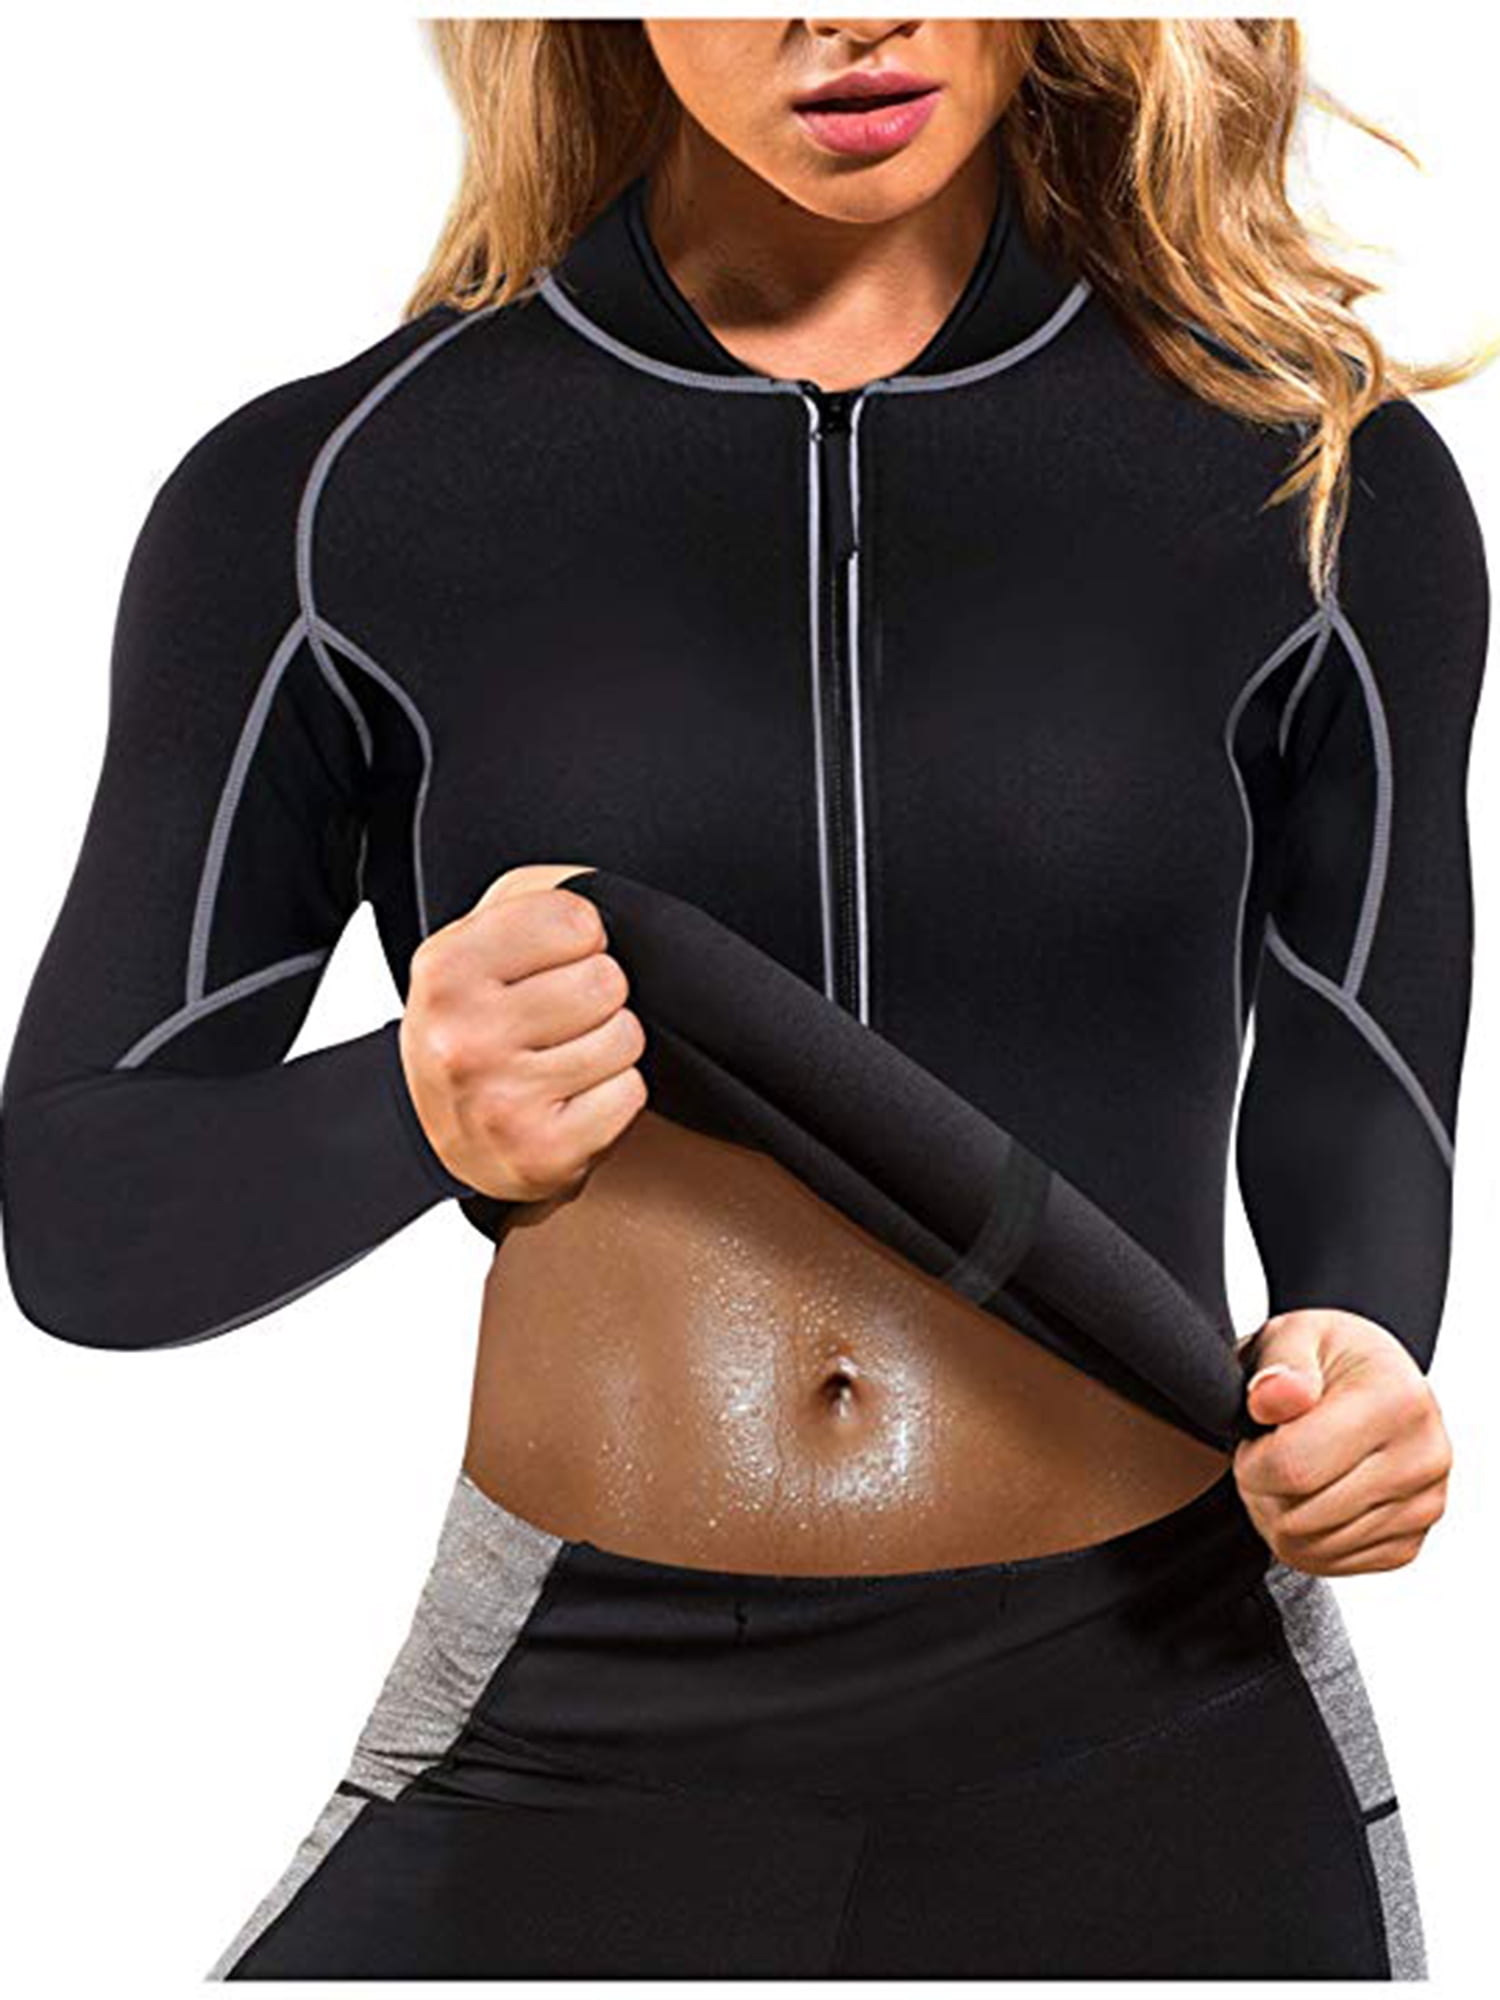 HEXIN Womens Waist Trainer Slimming Hot Neoprene Sweat Pants Weight Loss Sauna Suits S-3XL 